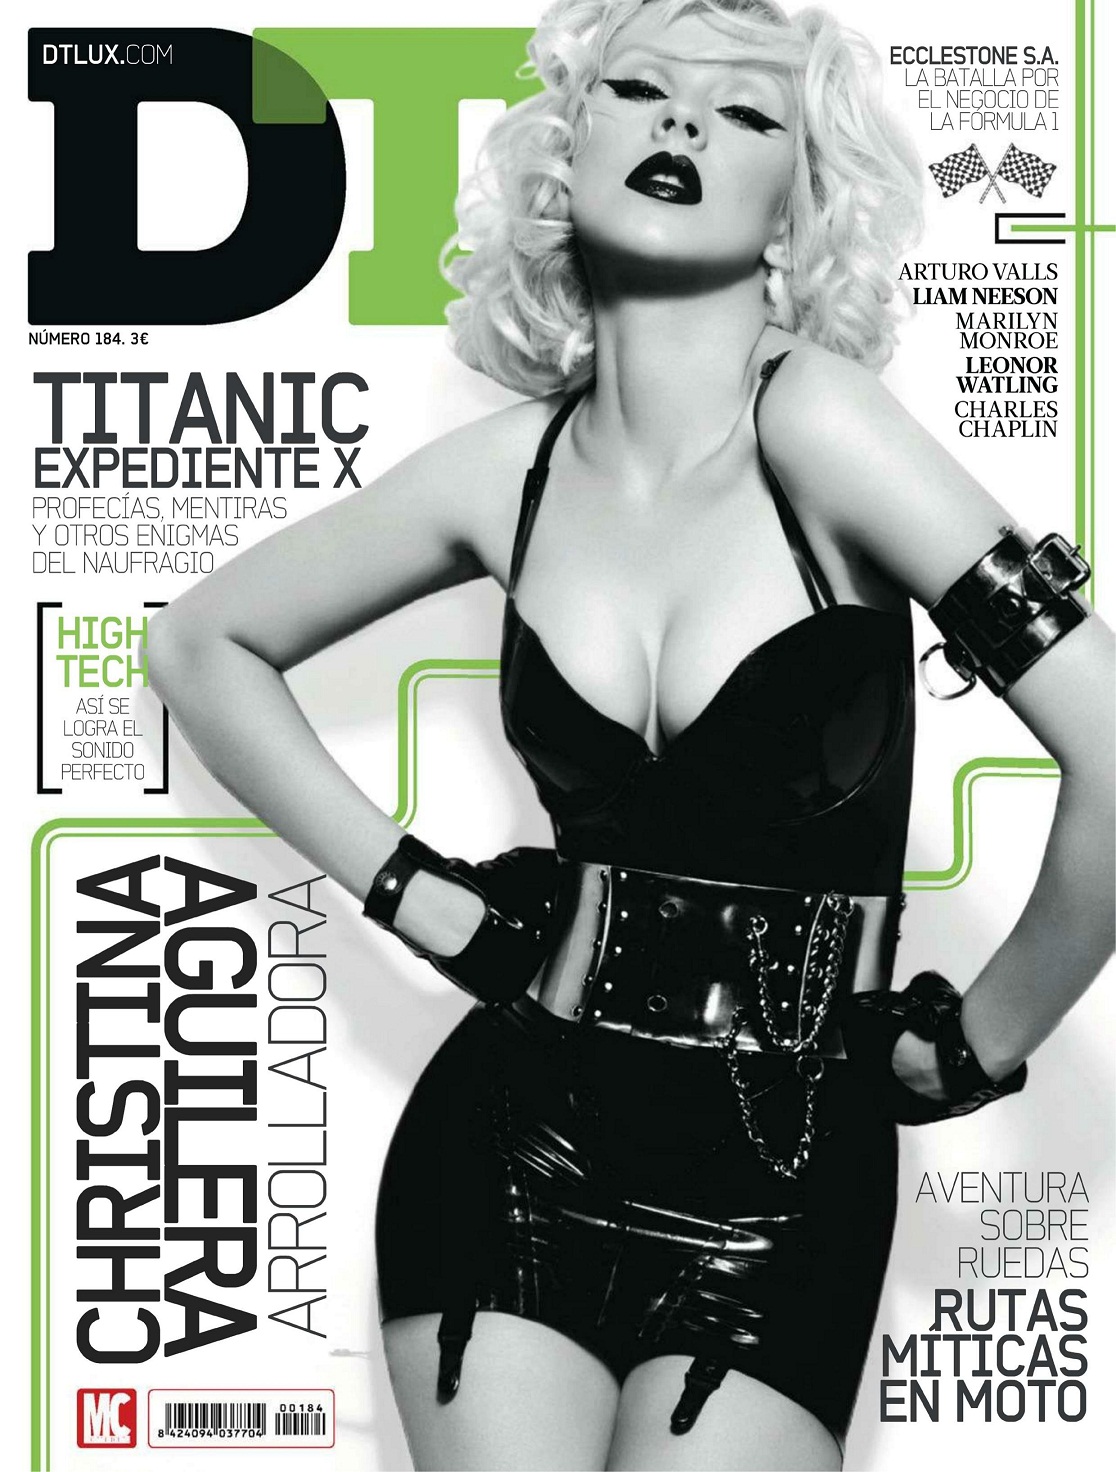 Christina Aguilera Wear Black Stockings For DT Spain Magazine (April 2012)